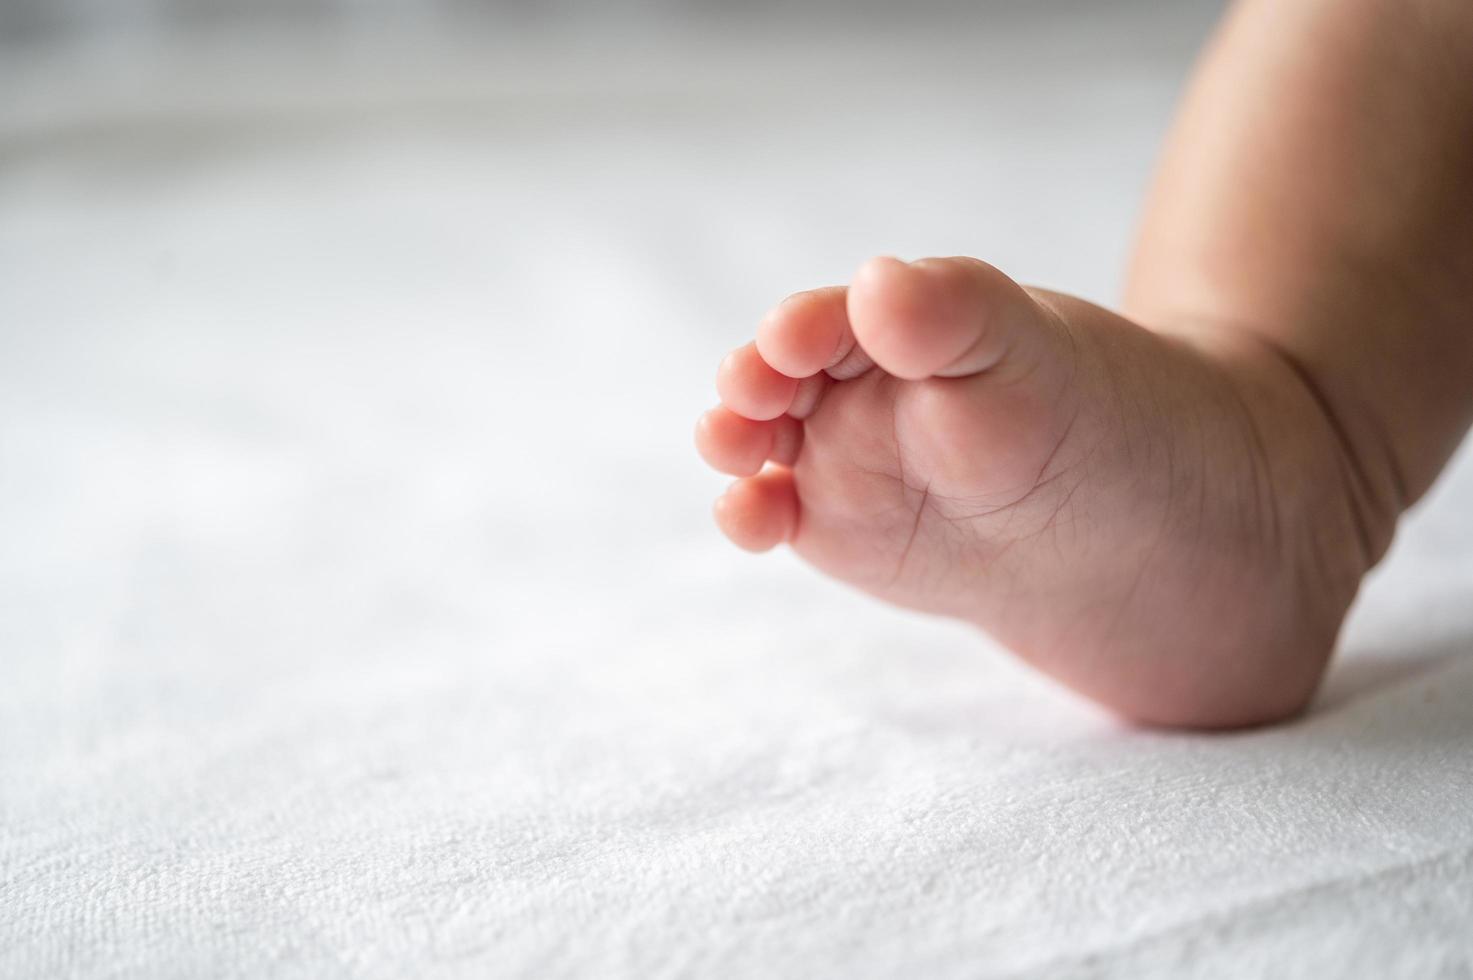 Baby feet close-up photo